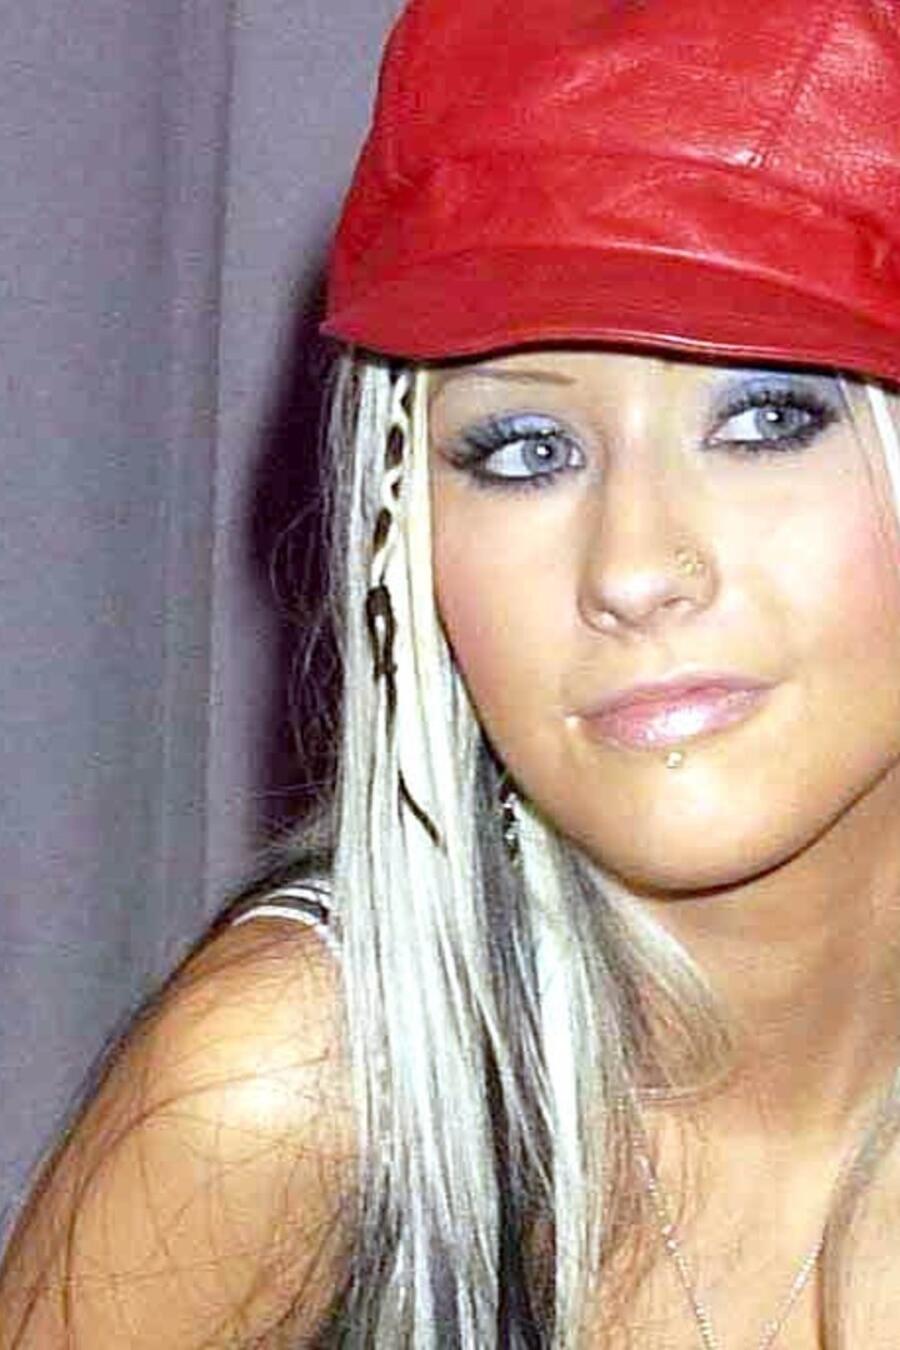 Christina Aguilera en 2002 cuando lanzó su álbum 'Stripped'.